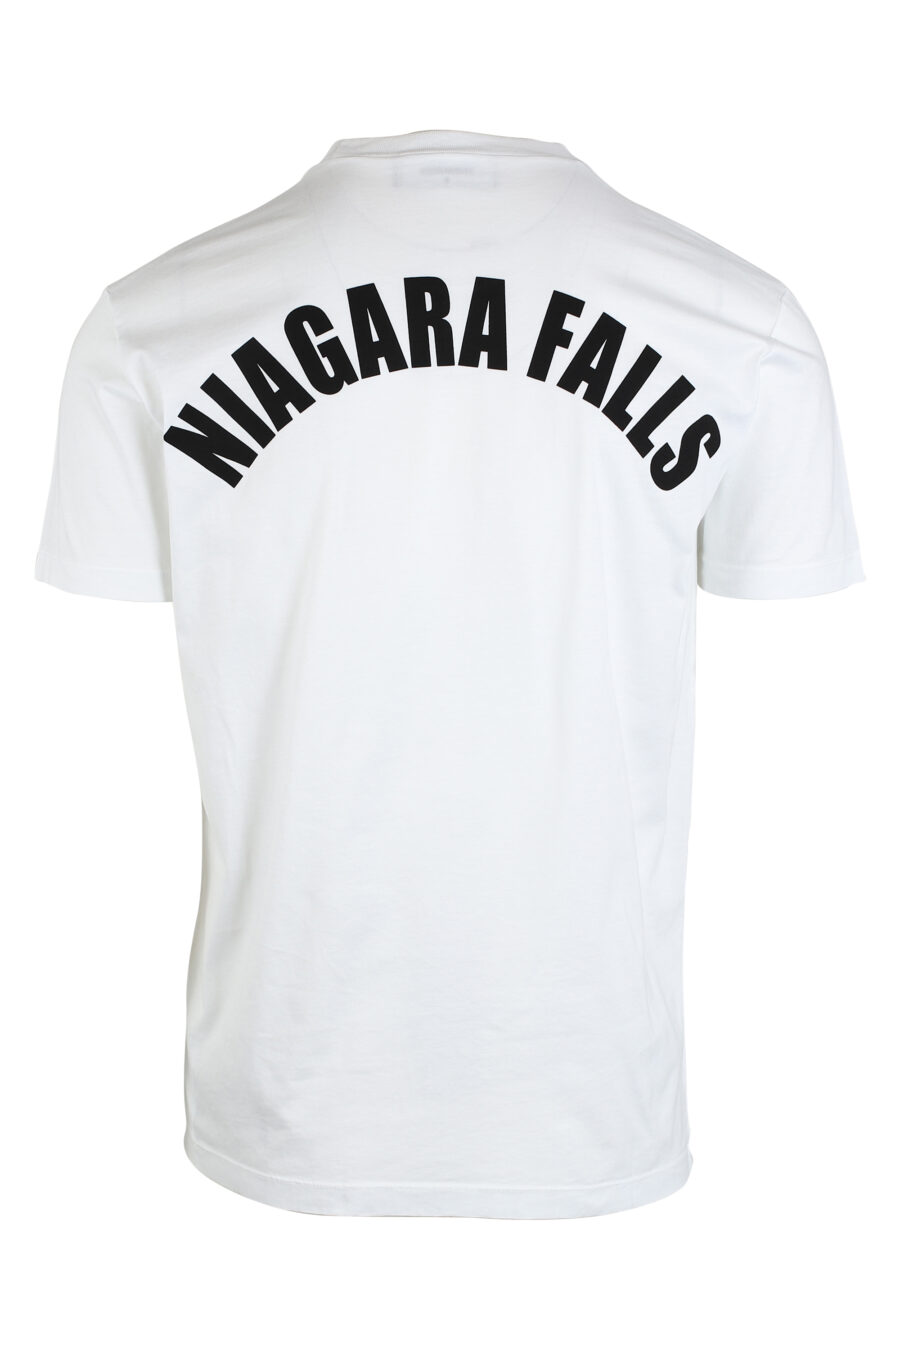 Weißes T-Shirt mit schwarzem Minilogo - IMG 0672